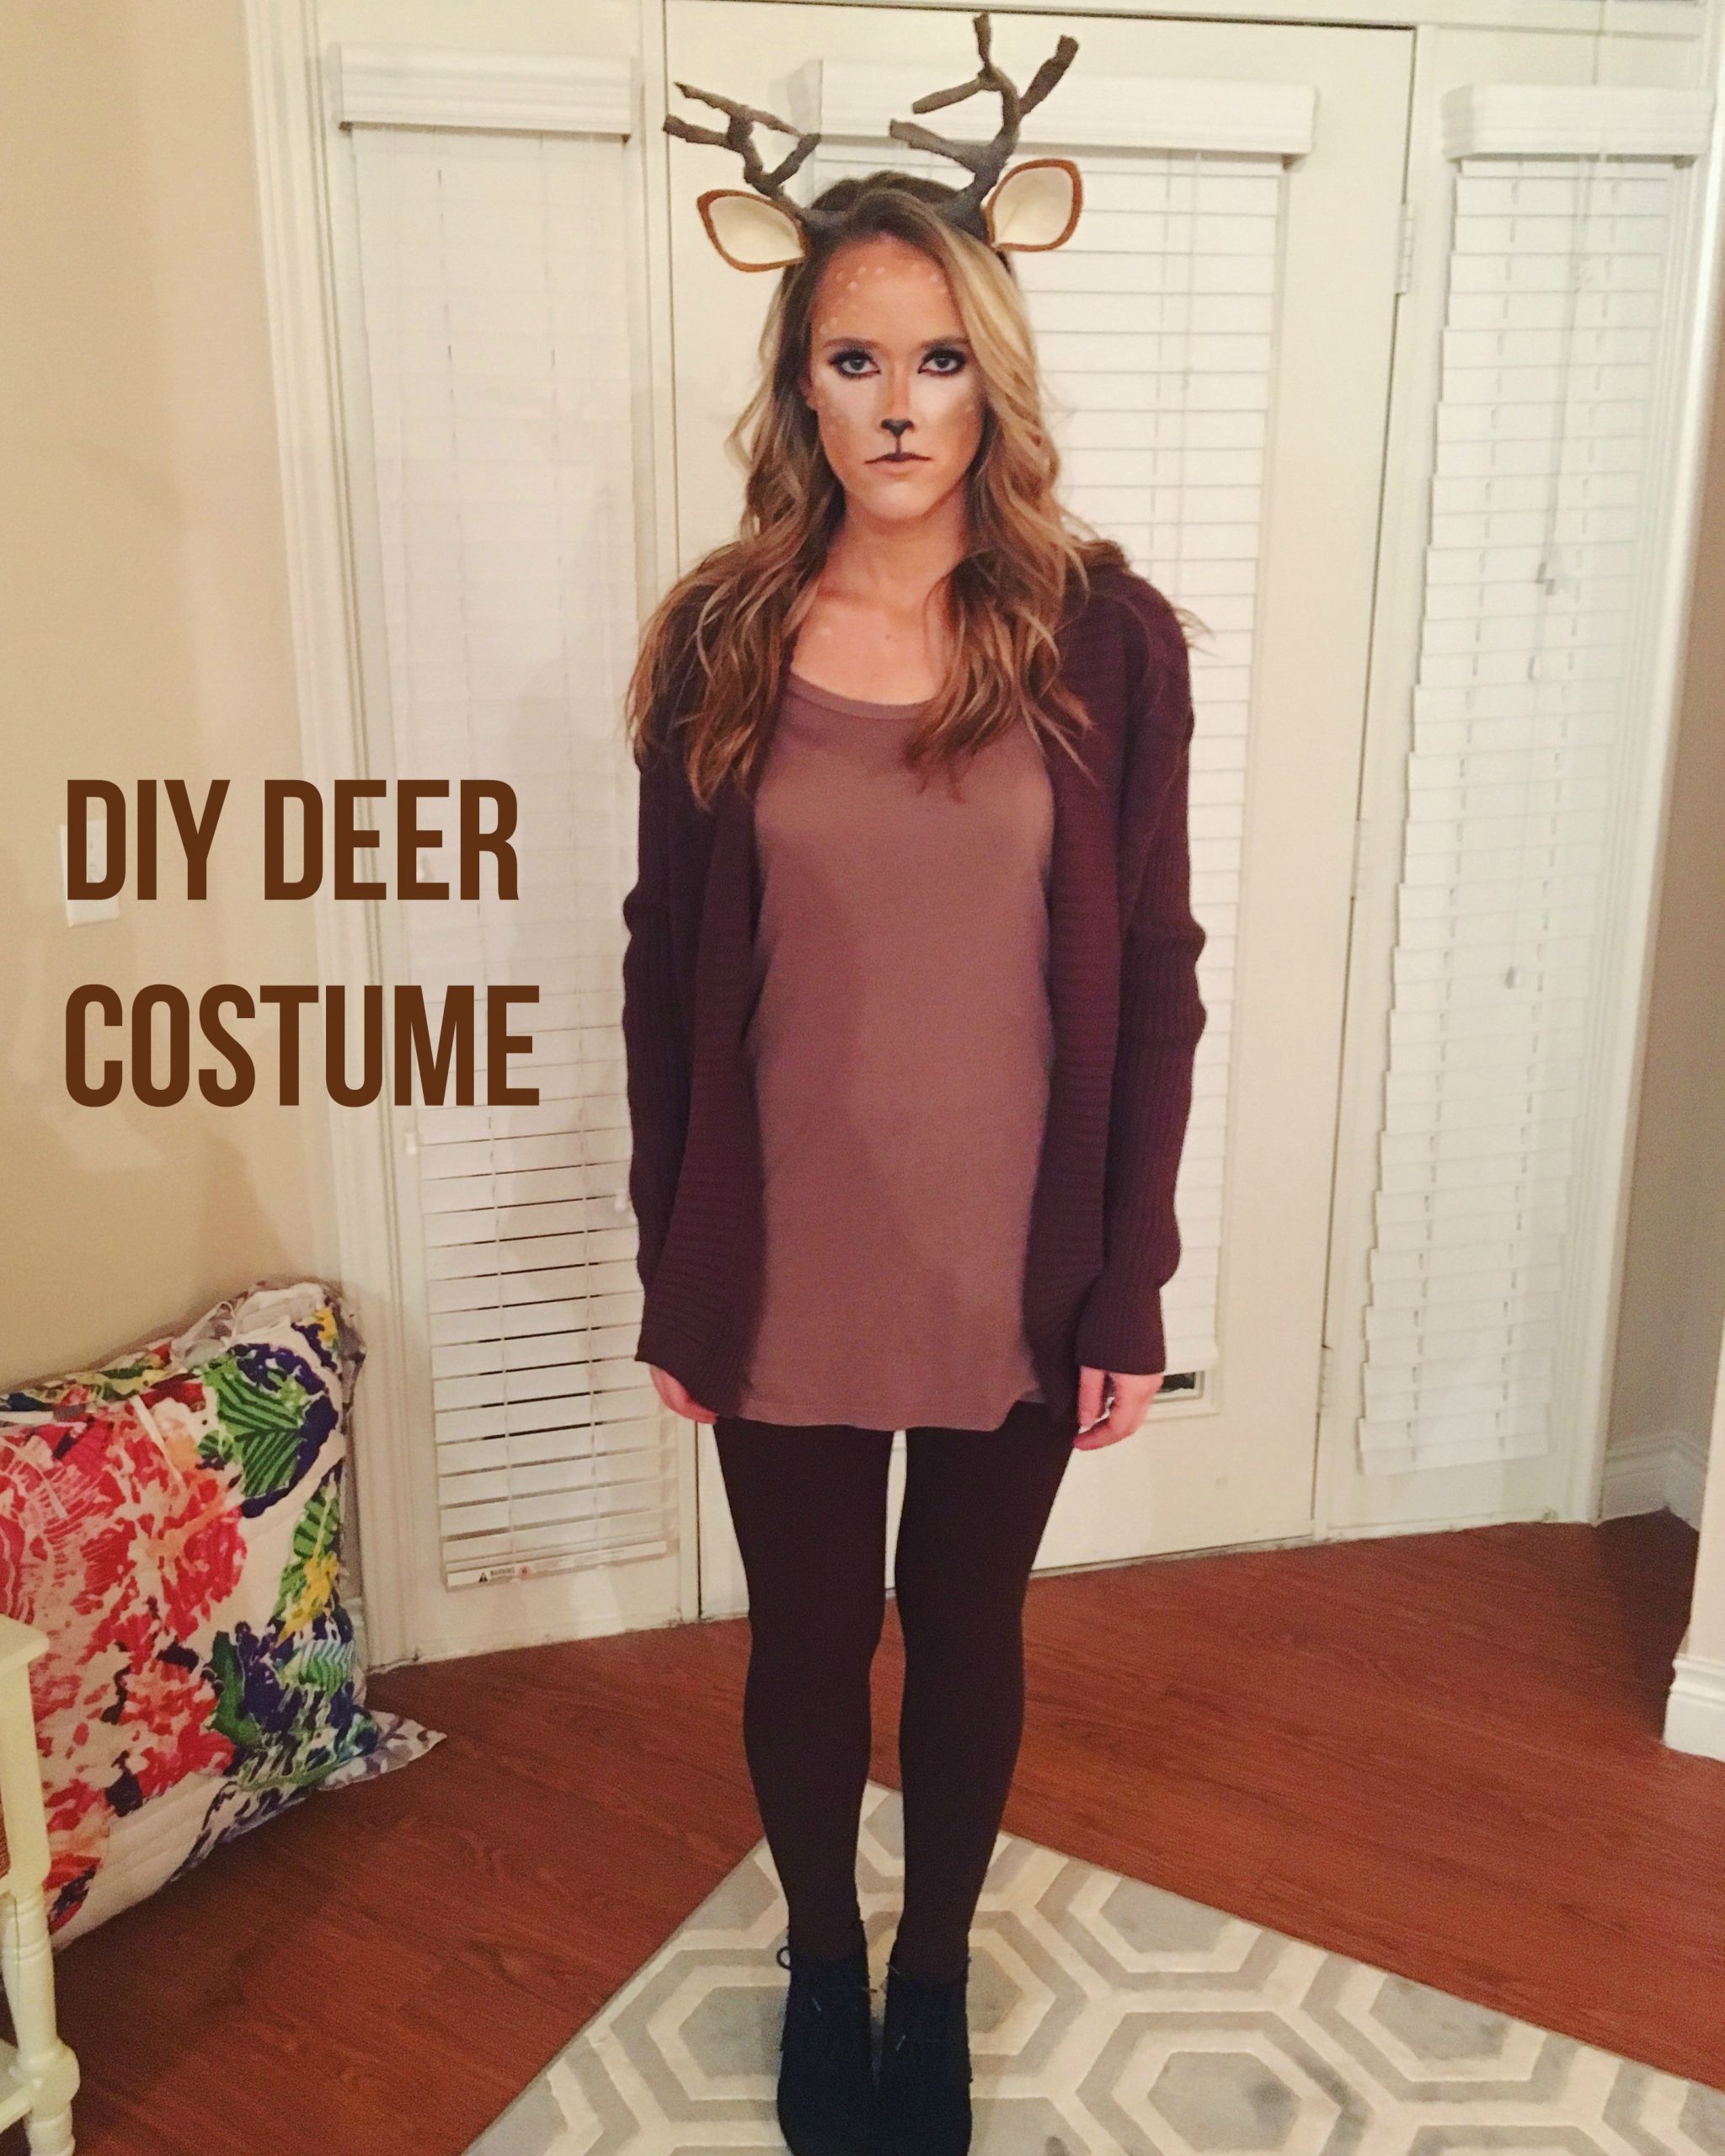 Deer Halloween Costume DIY
 DIY deer costume